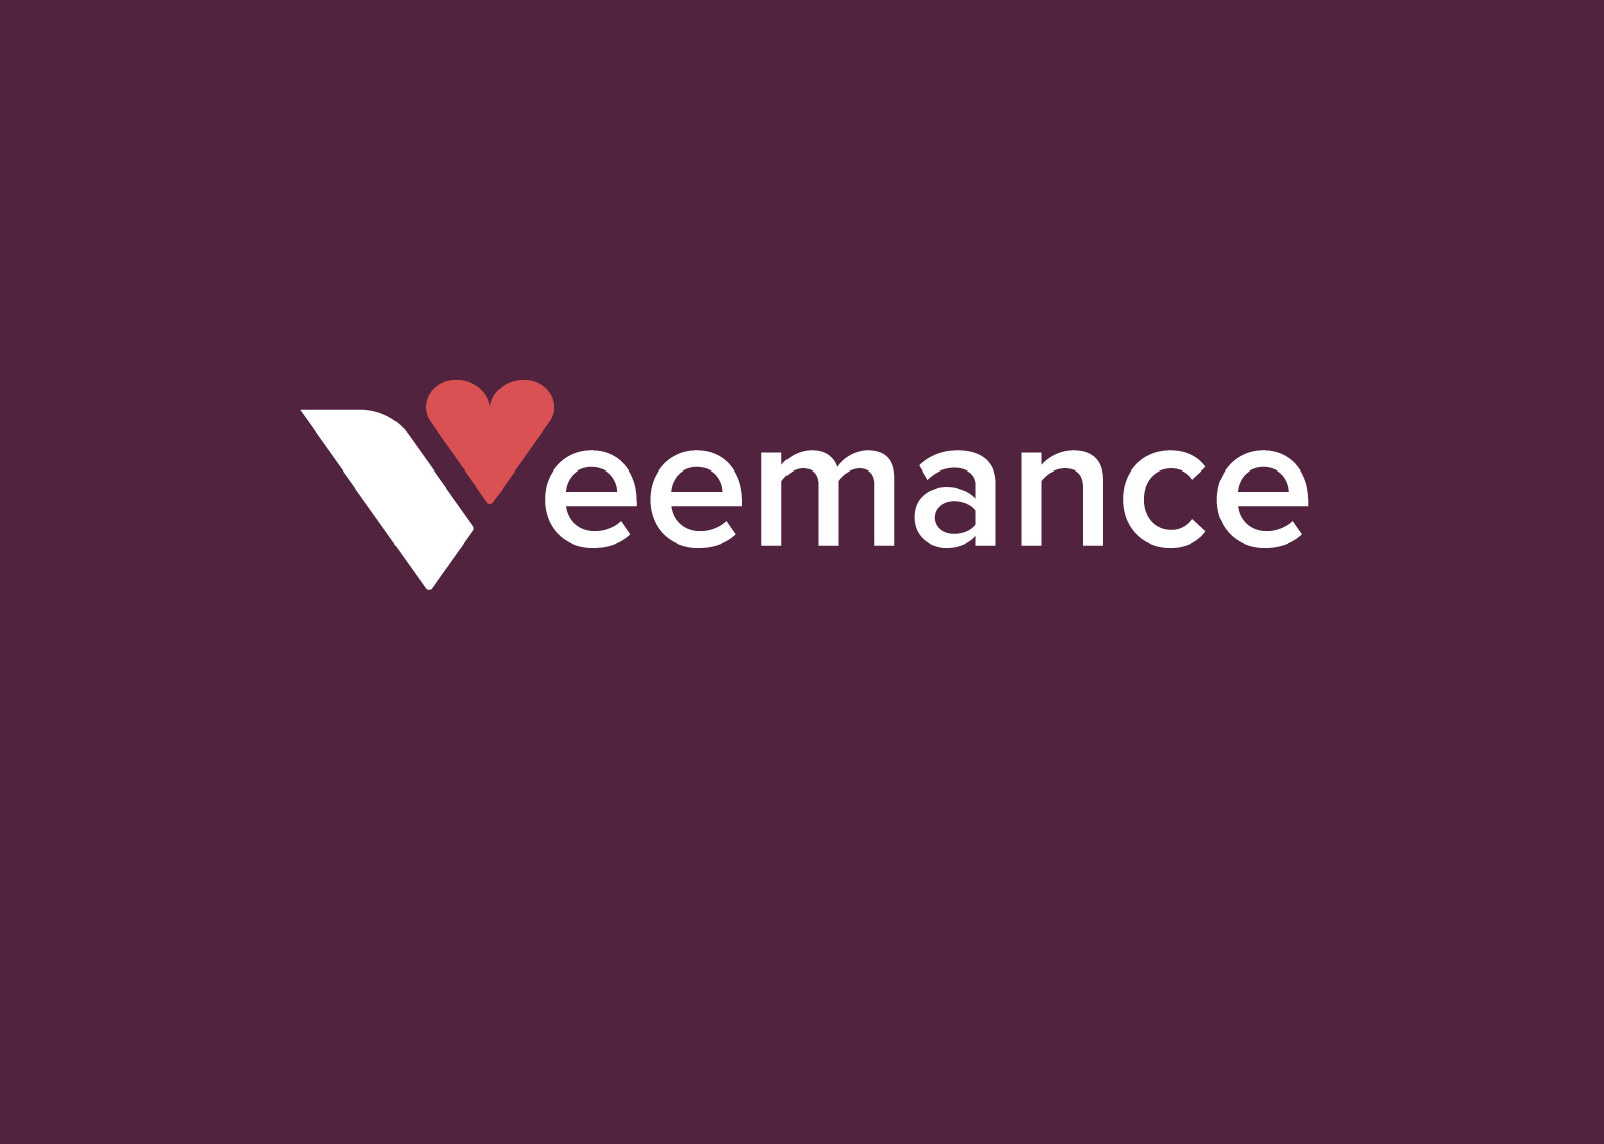 branding-and-logo-design-sydney-creative-agency-veemance-3